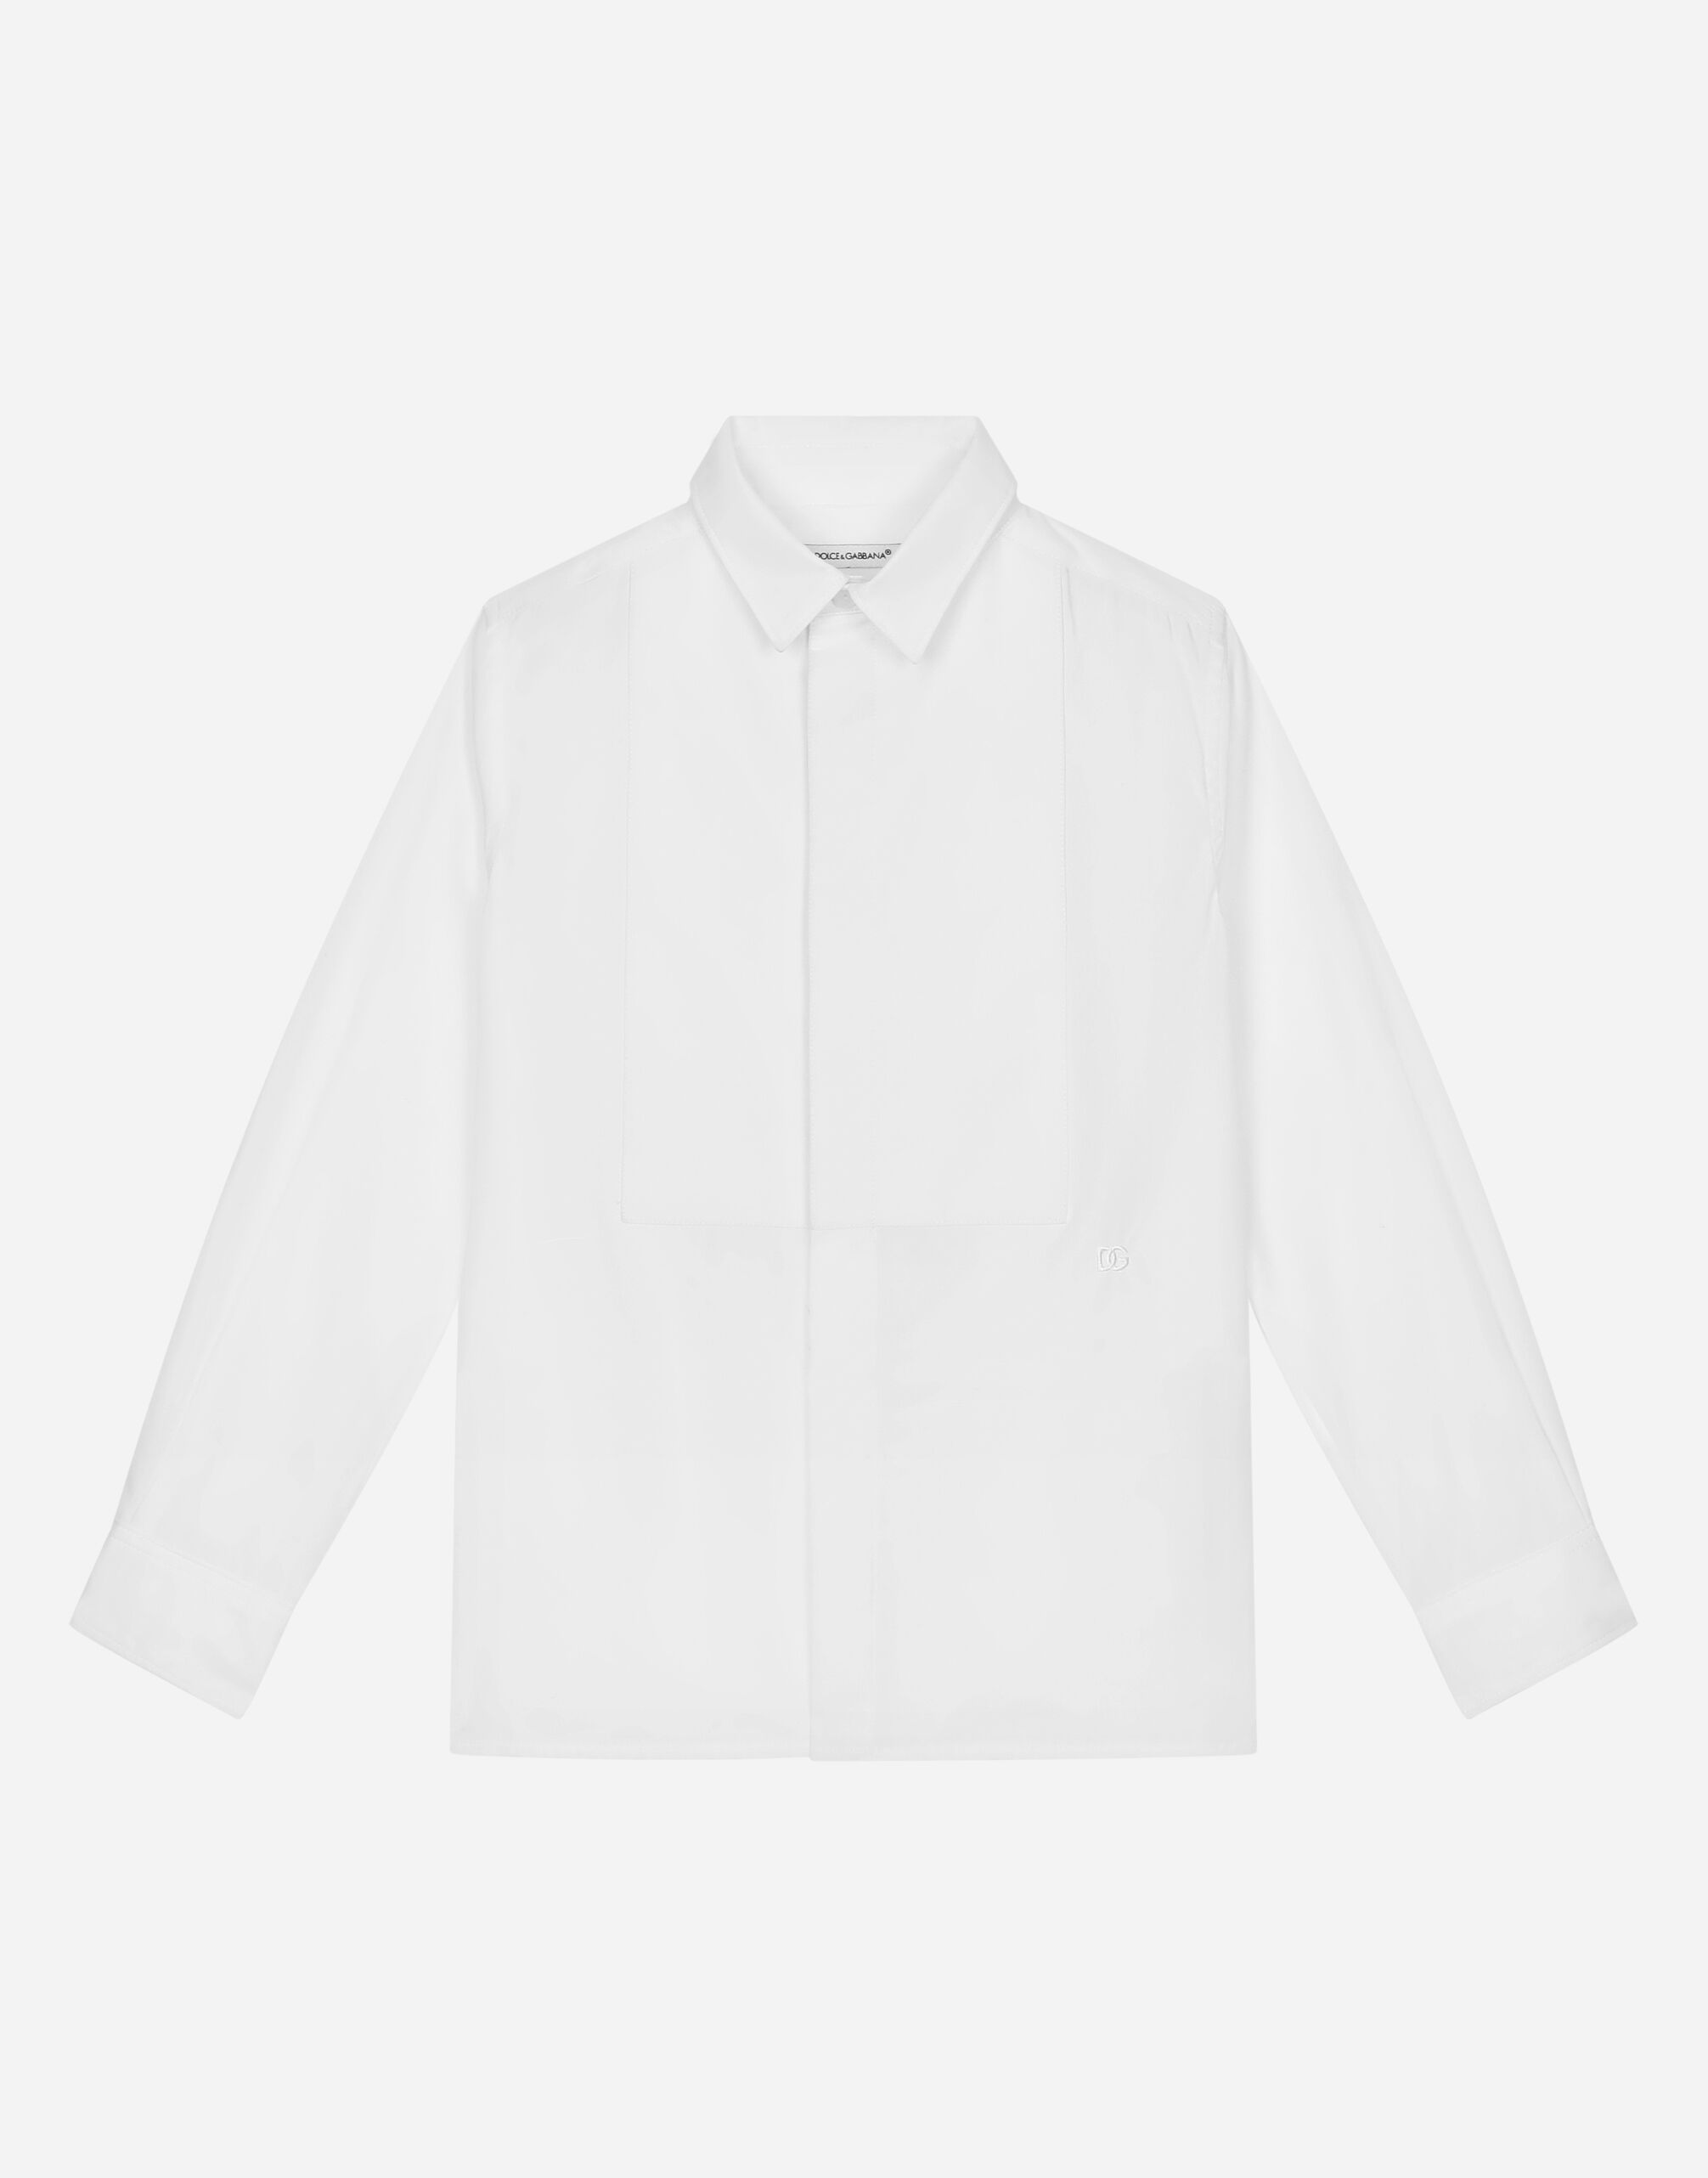 Dolce & Gabbana Poplin jacquard tuxedo shirt with DG logo Multicolor L4J840G7H2U